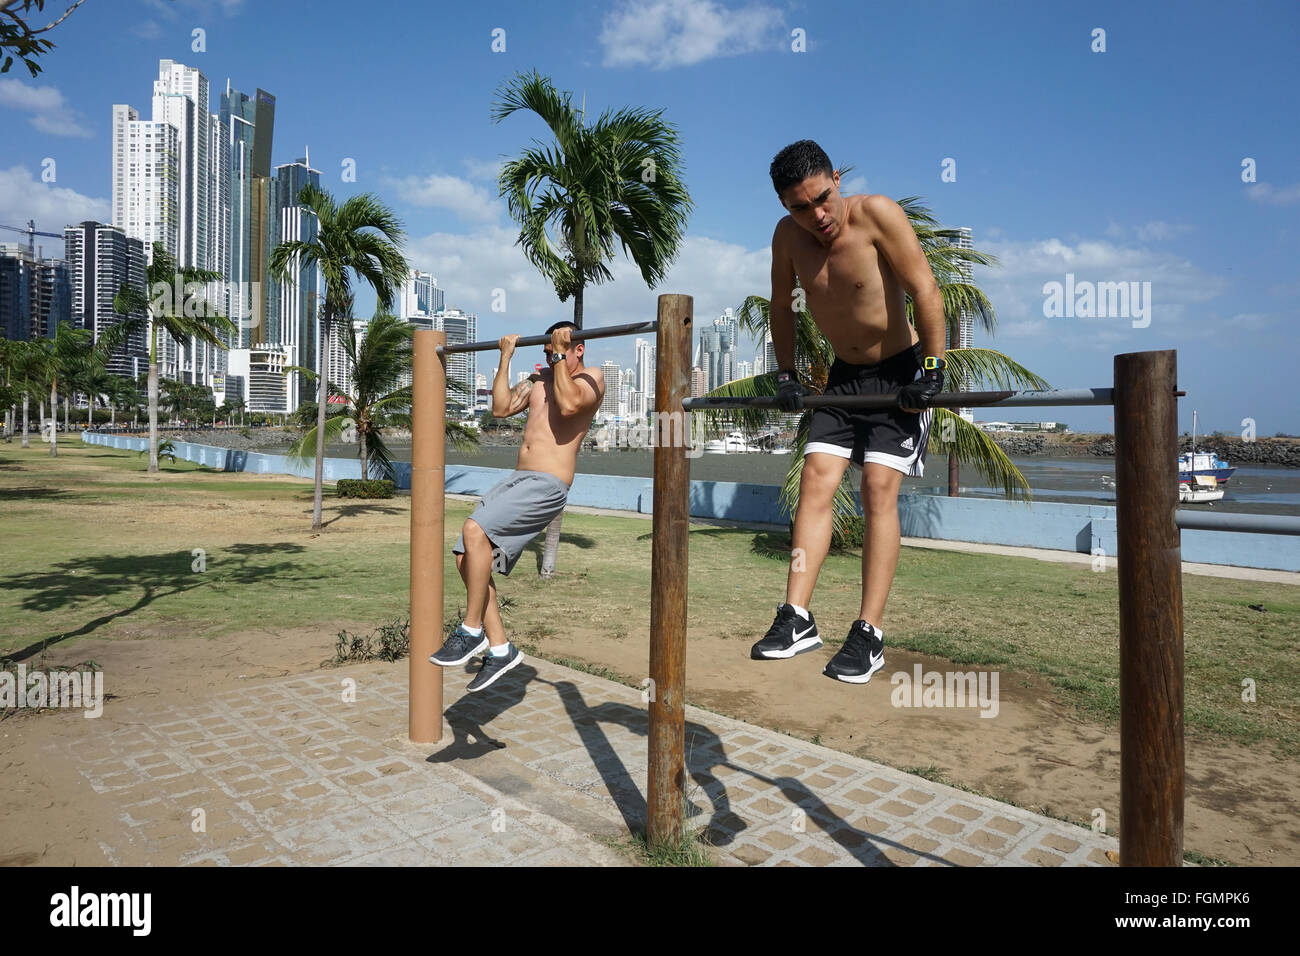 Panama-Stadt Mittelamerika Sport an der Küste Umgehungsstraße Cinta costera Stockfoto